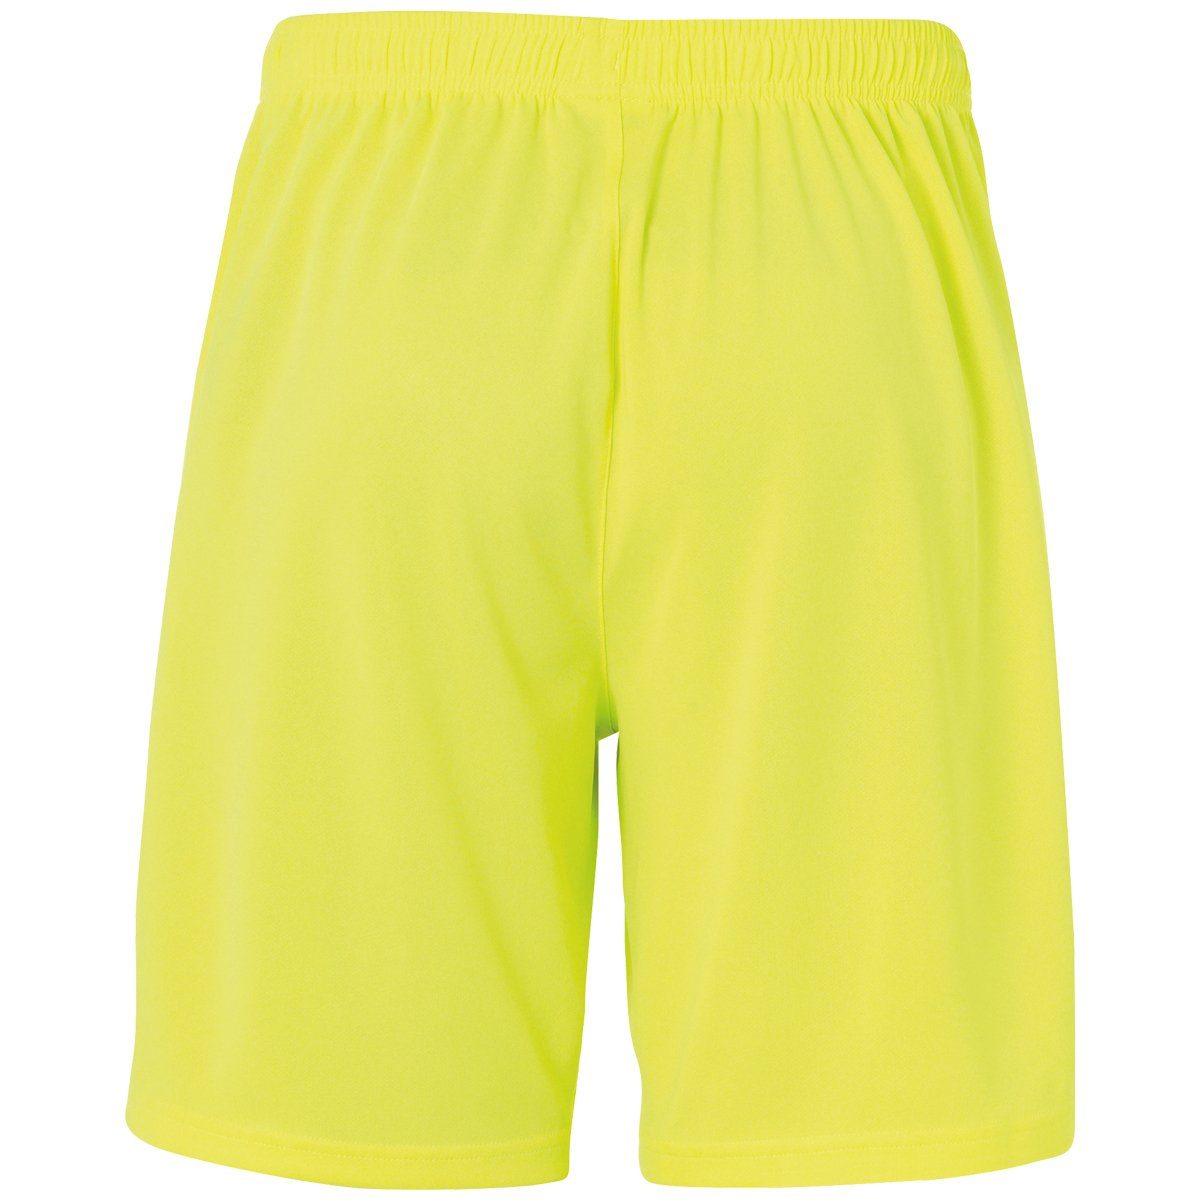 uhlsport Shorts fluo gelb/radar blau Shorts uhlsport